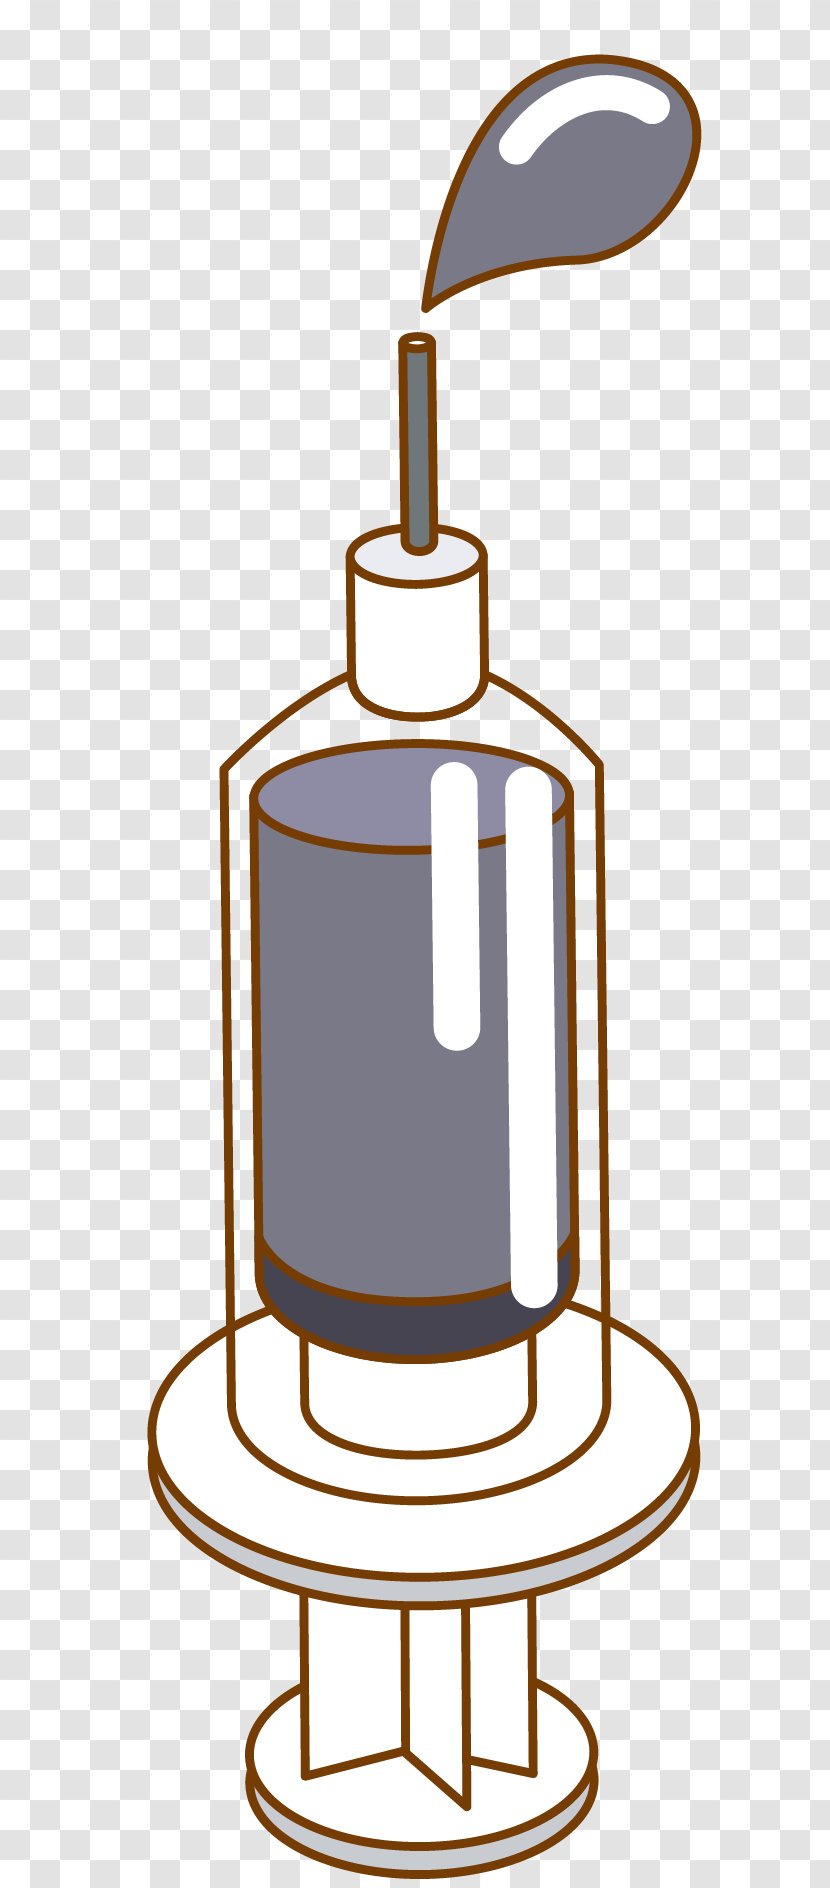 Syringe Cartoon Clip Art - Vector Material Transparent PNG